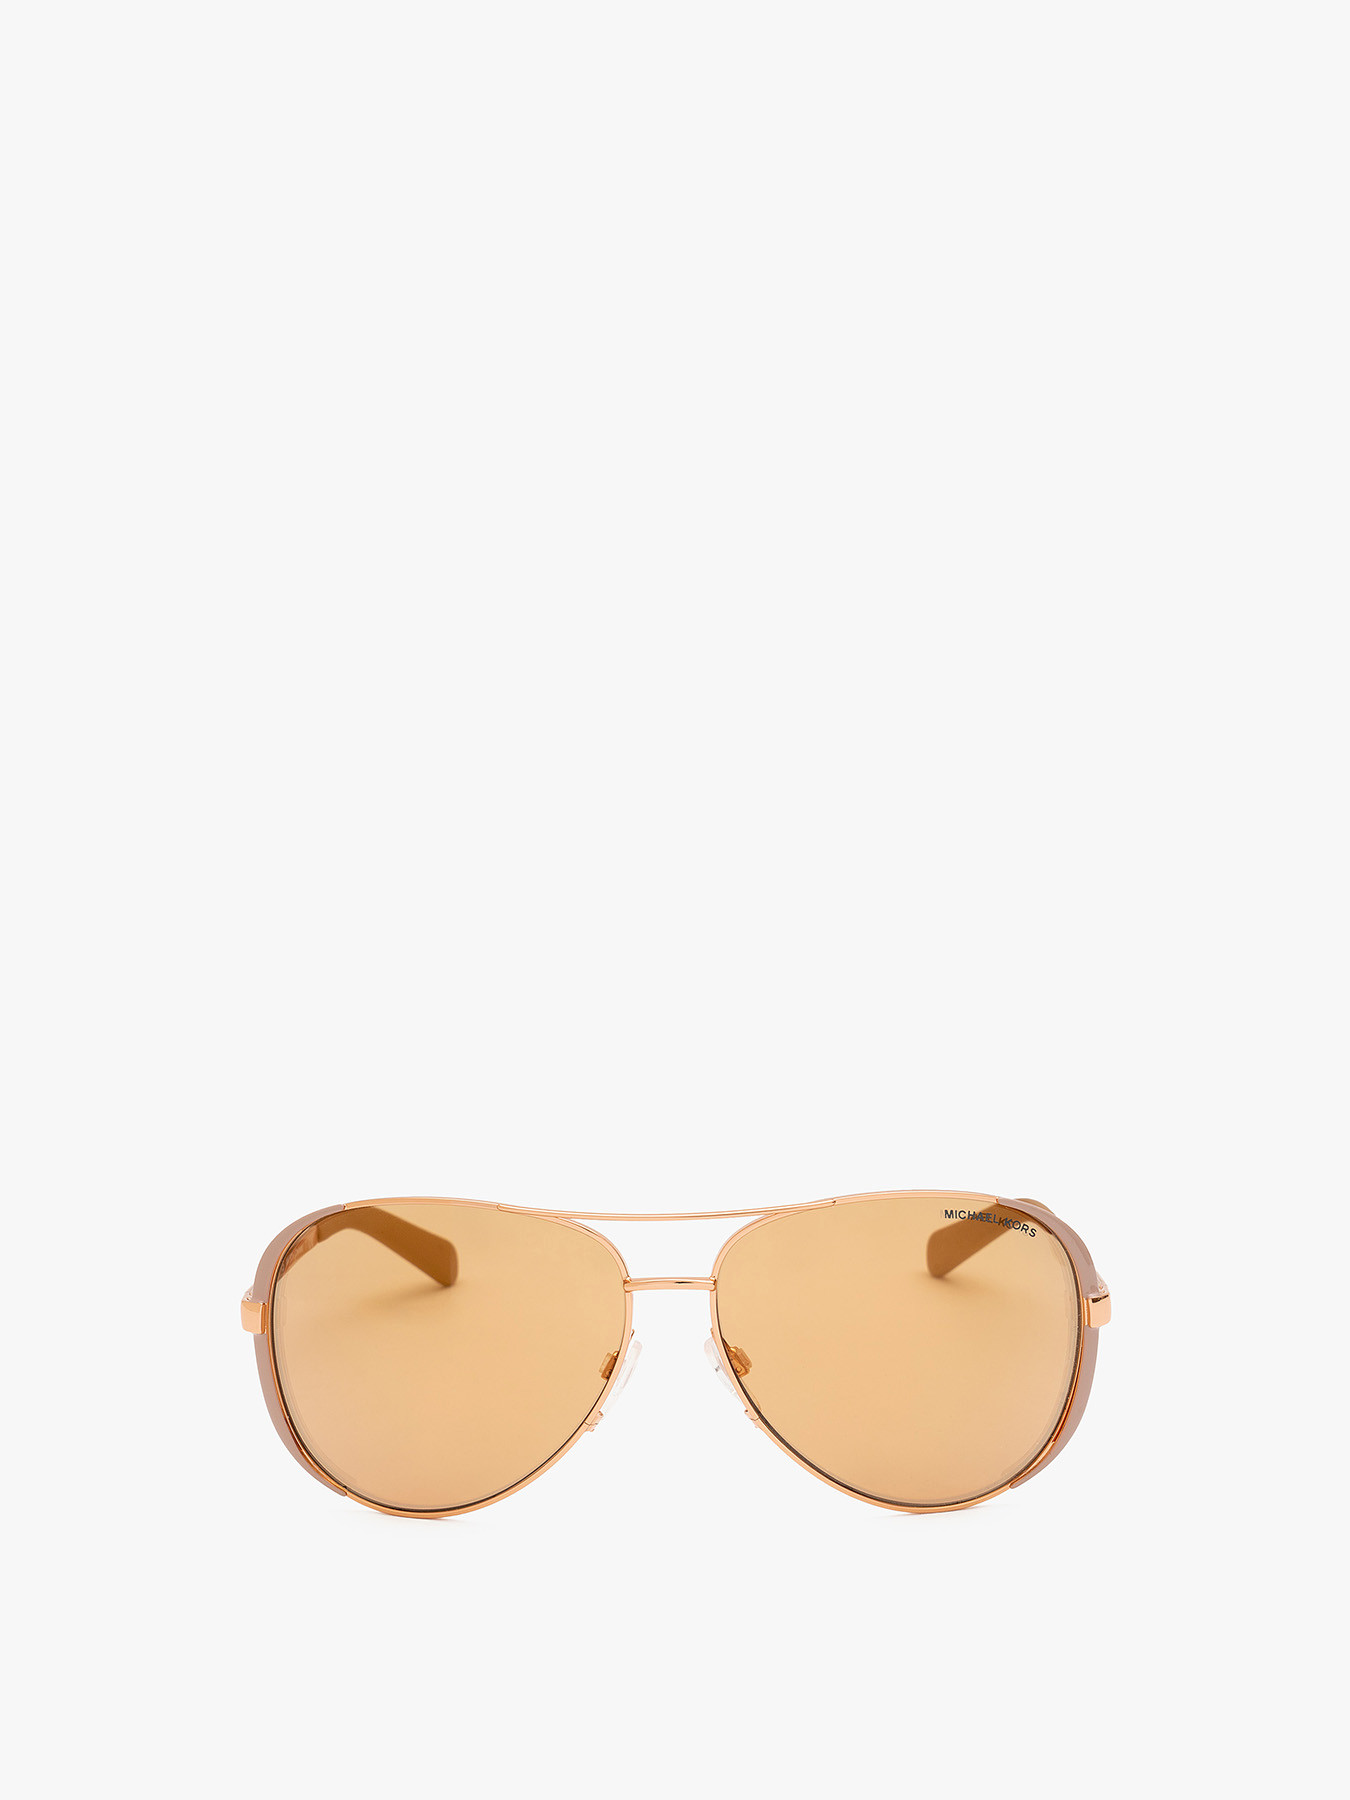 MK5004 CHELSEA Sunglasses Gold Brown  SmartBuyGlasses USA